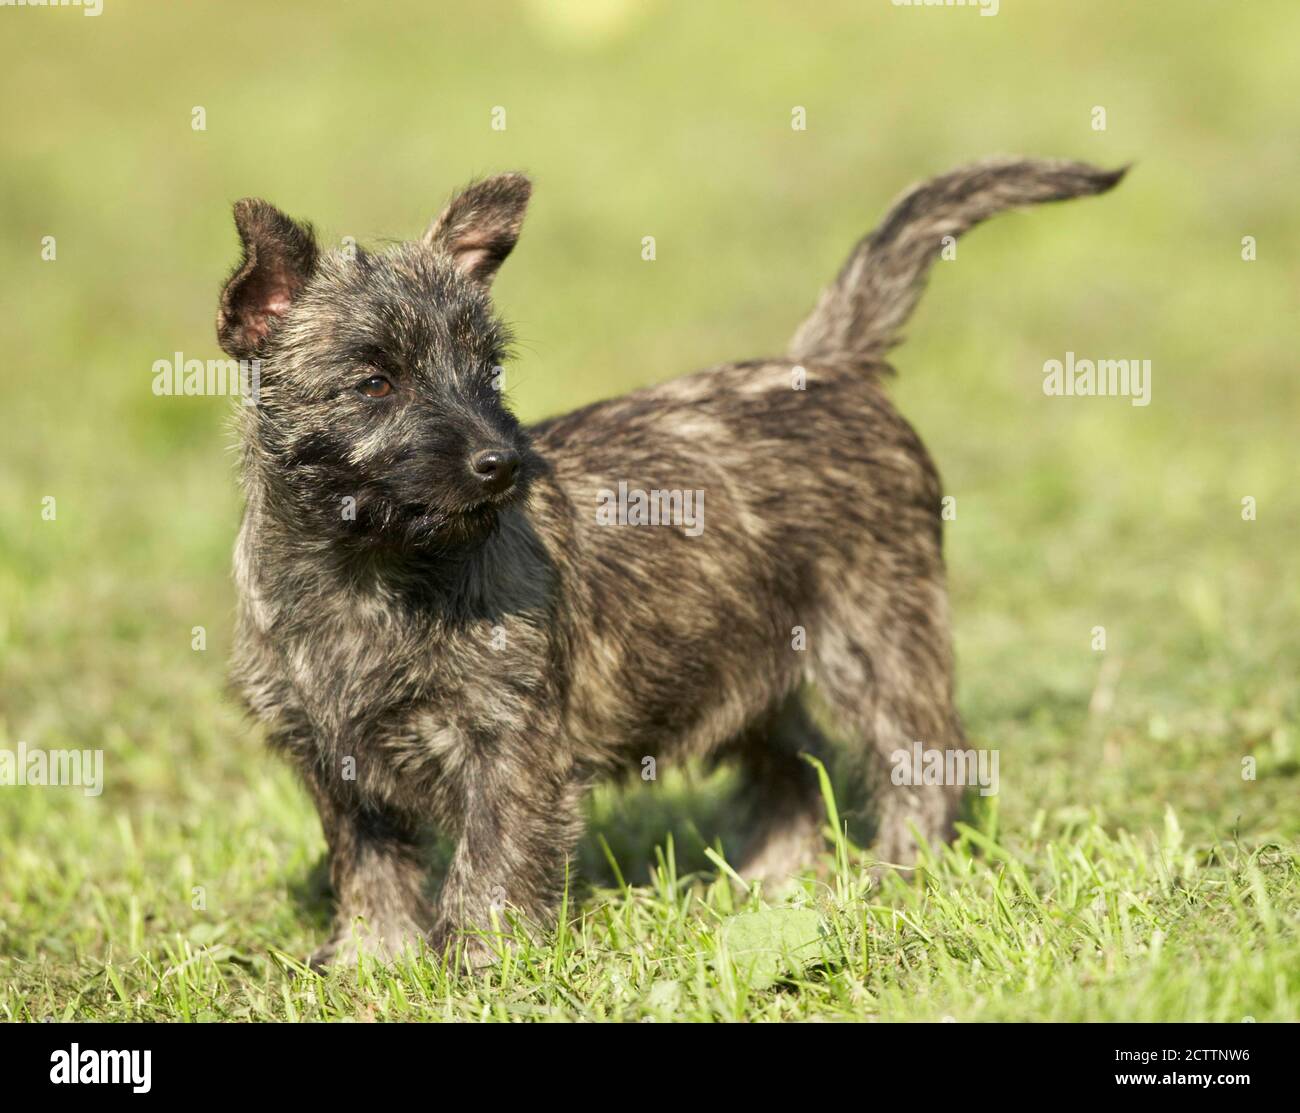 Cairn Terrier. Puppy standing on grass. Stock Photo